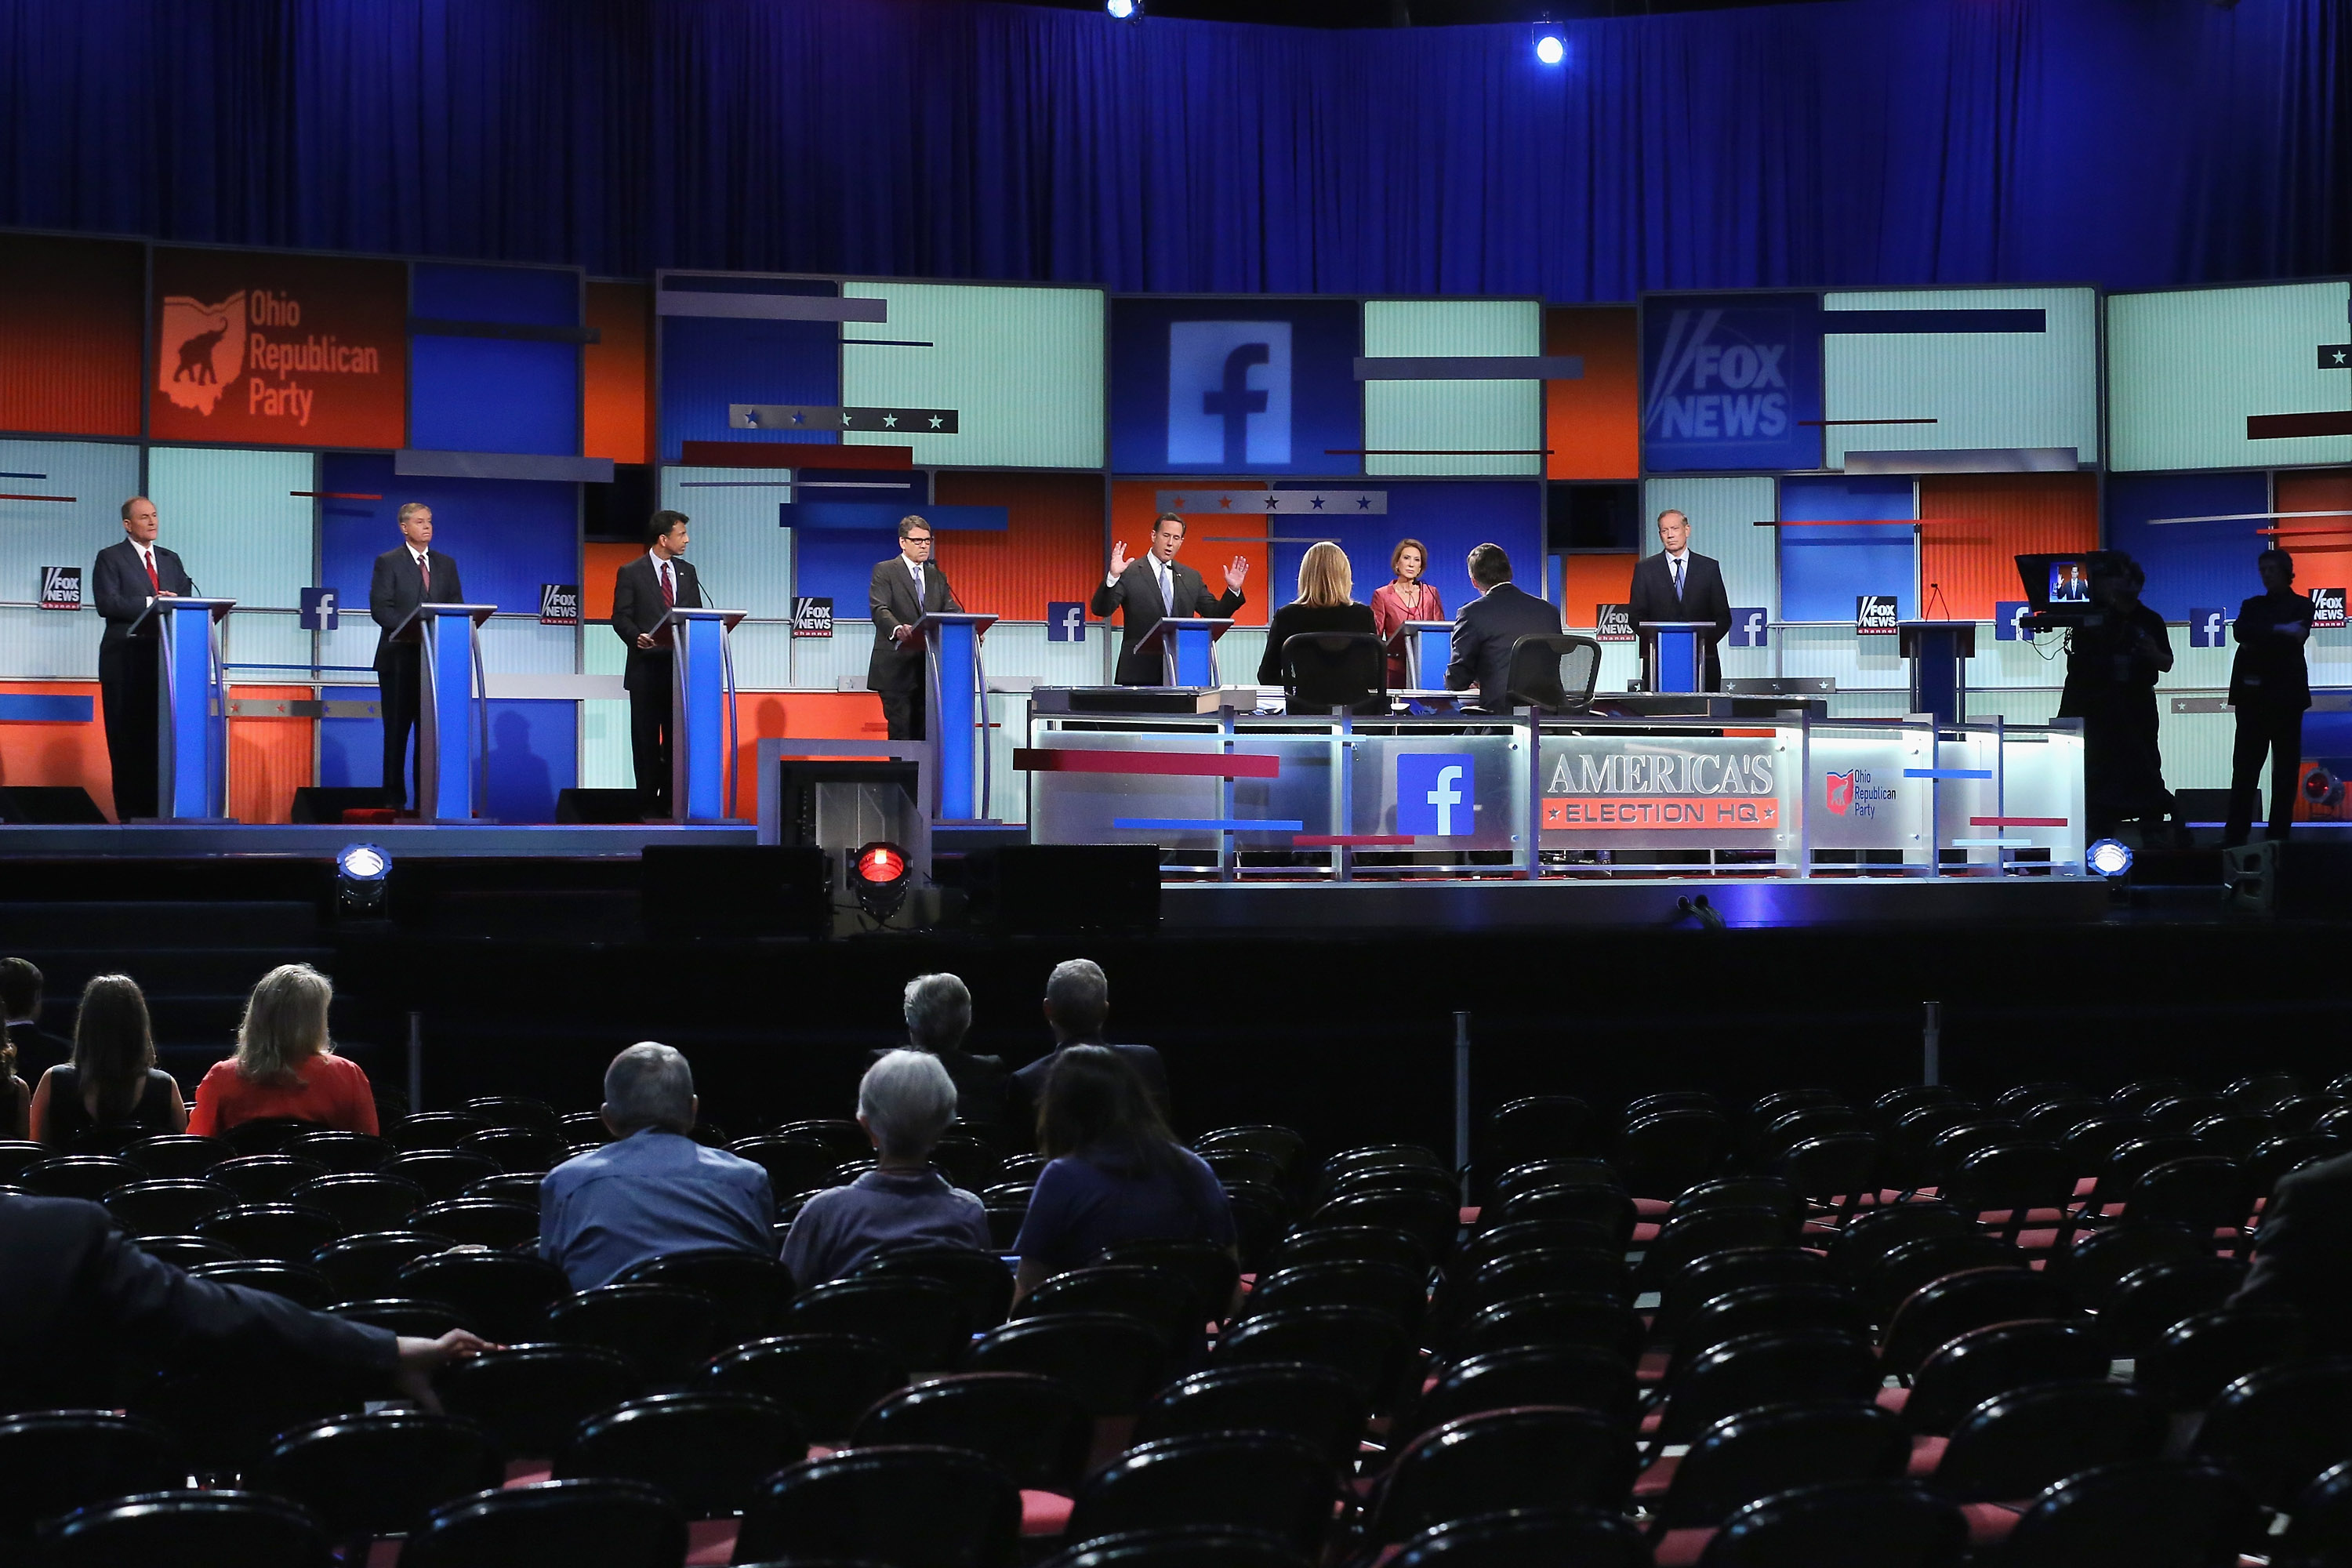 GOP debate 2015: Transcript of the prime-time debate - CBS News